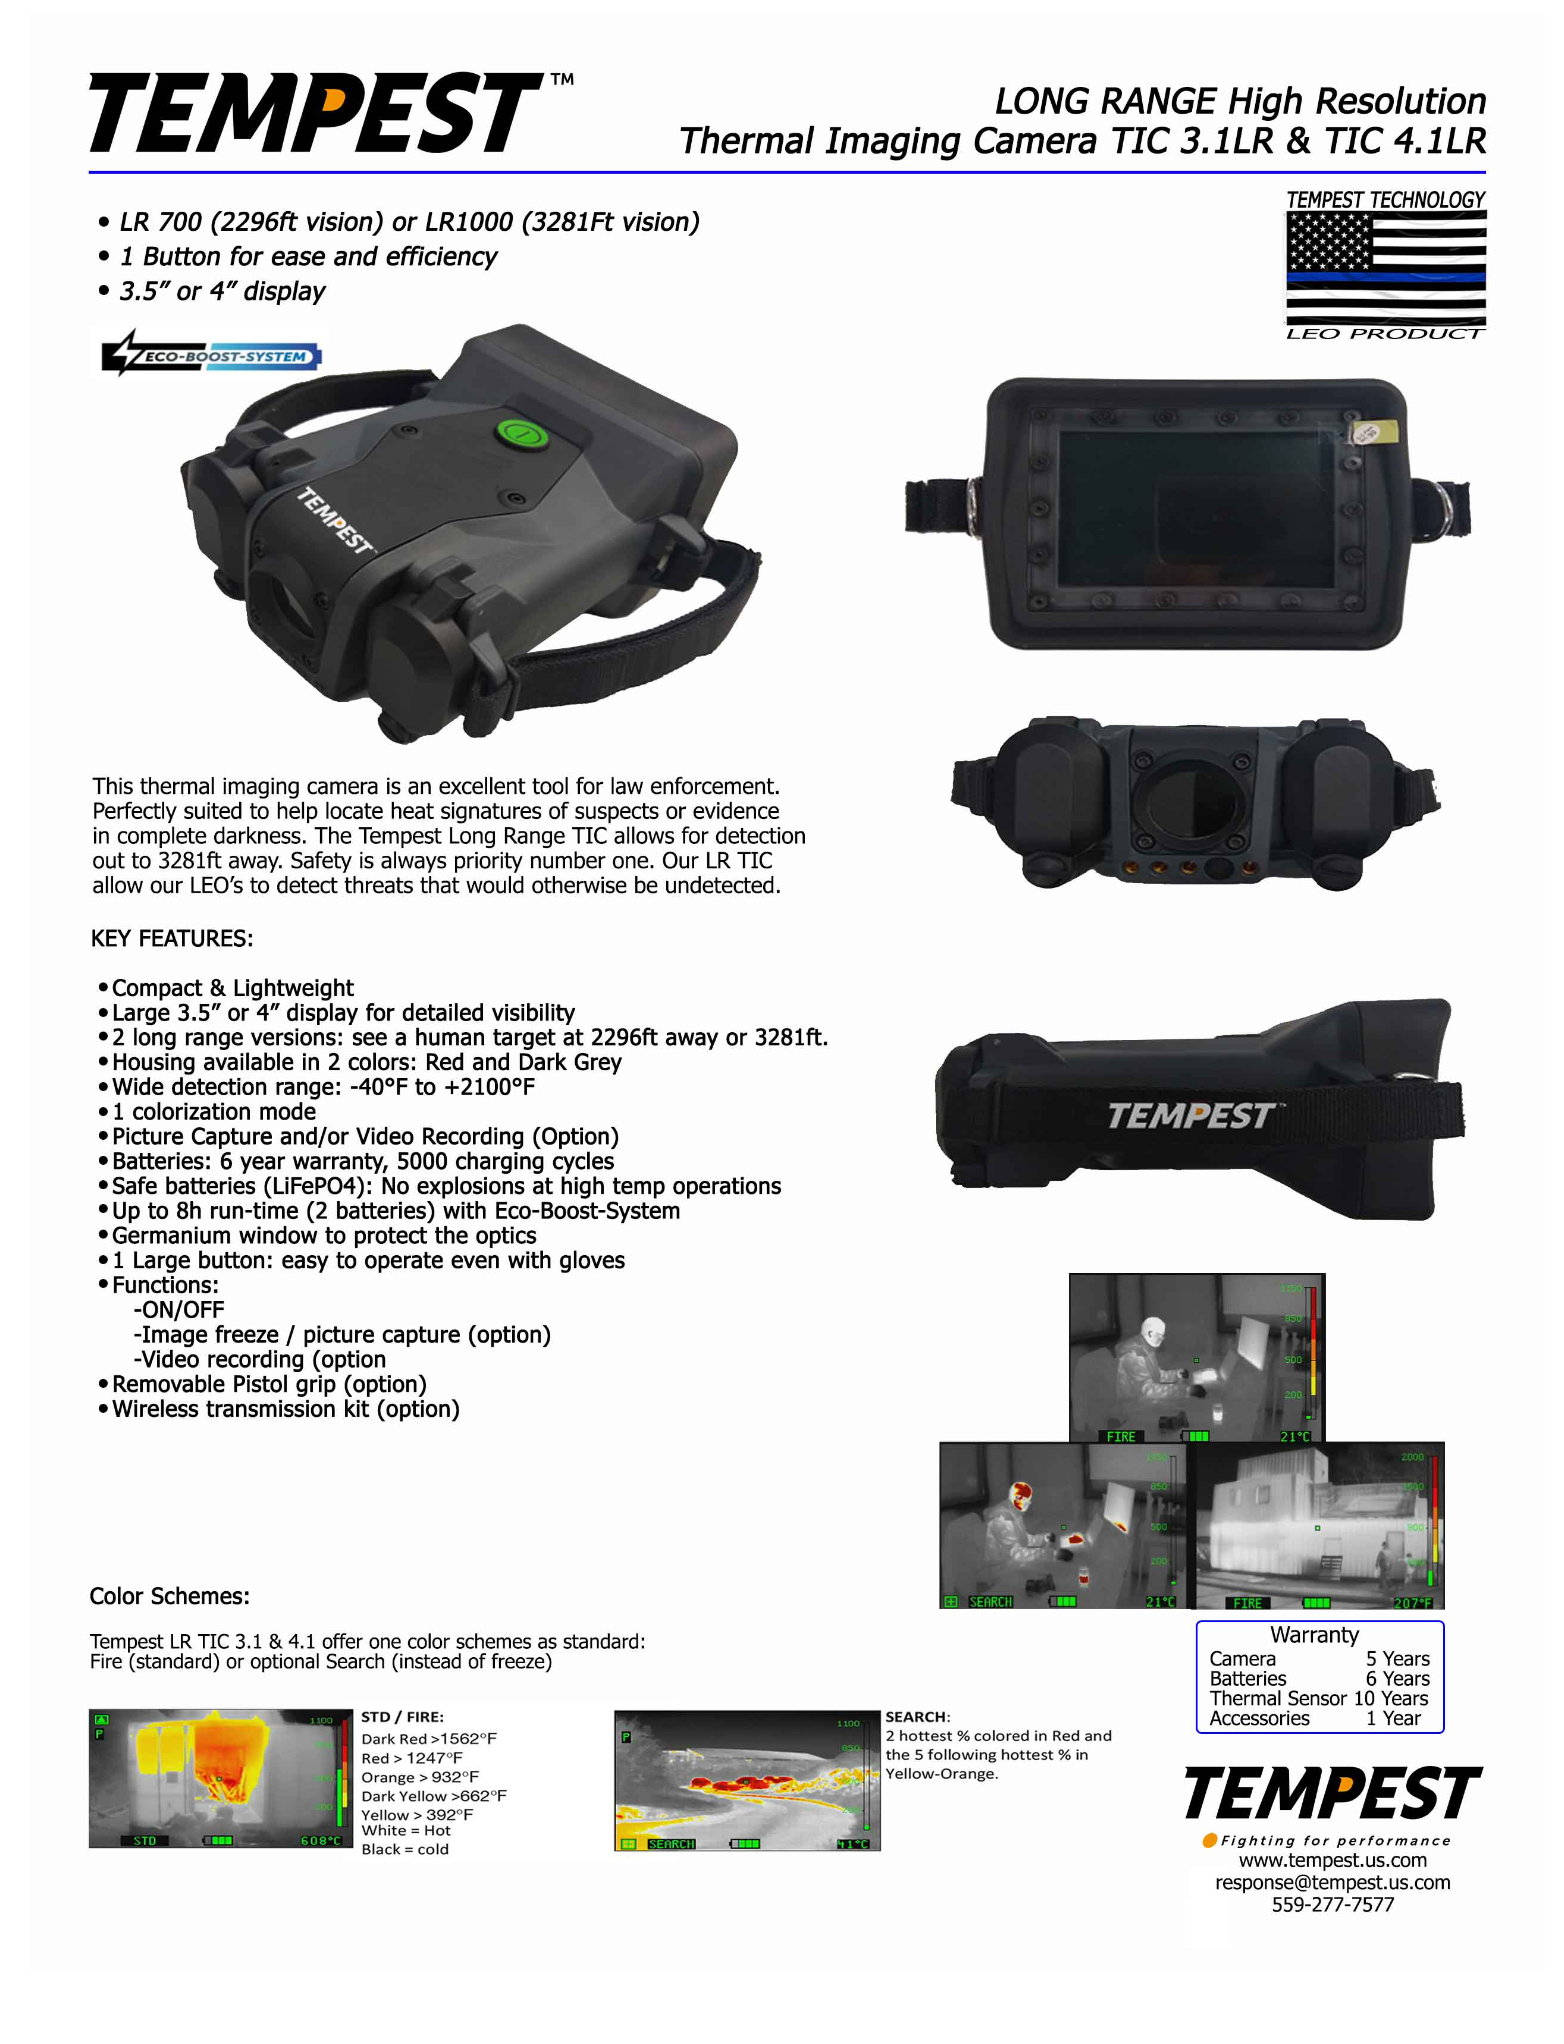 Long Range Thermal Imaging Cameras Tempest TIC 3.1 LR